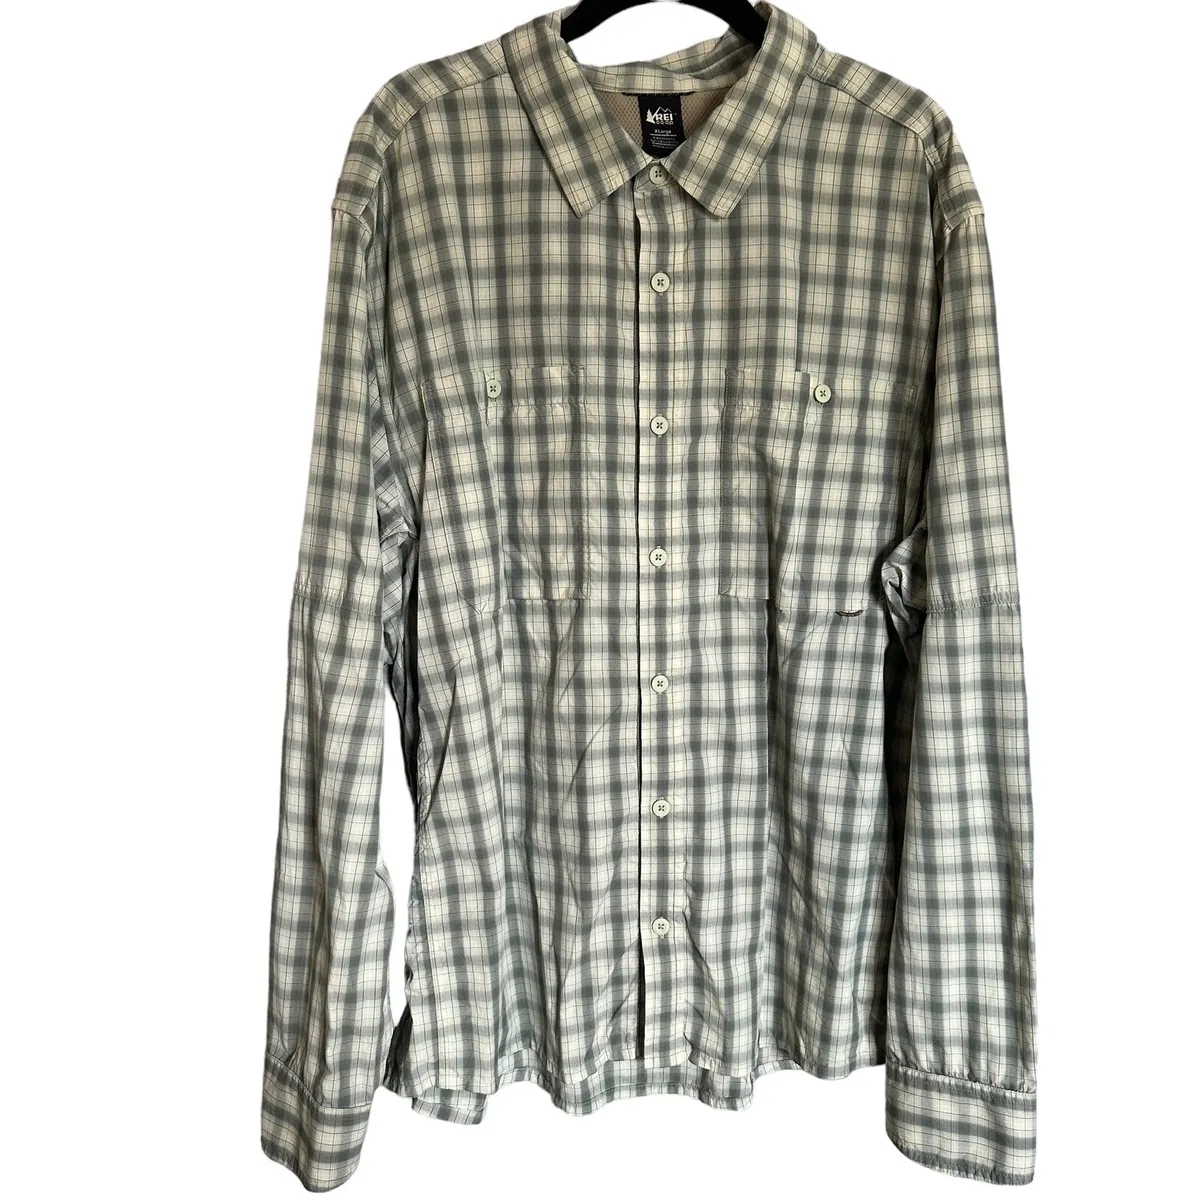 REI Co-Op Plaid Long Sleeve Button Up Vented Hiking Shirt XL | eBay